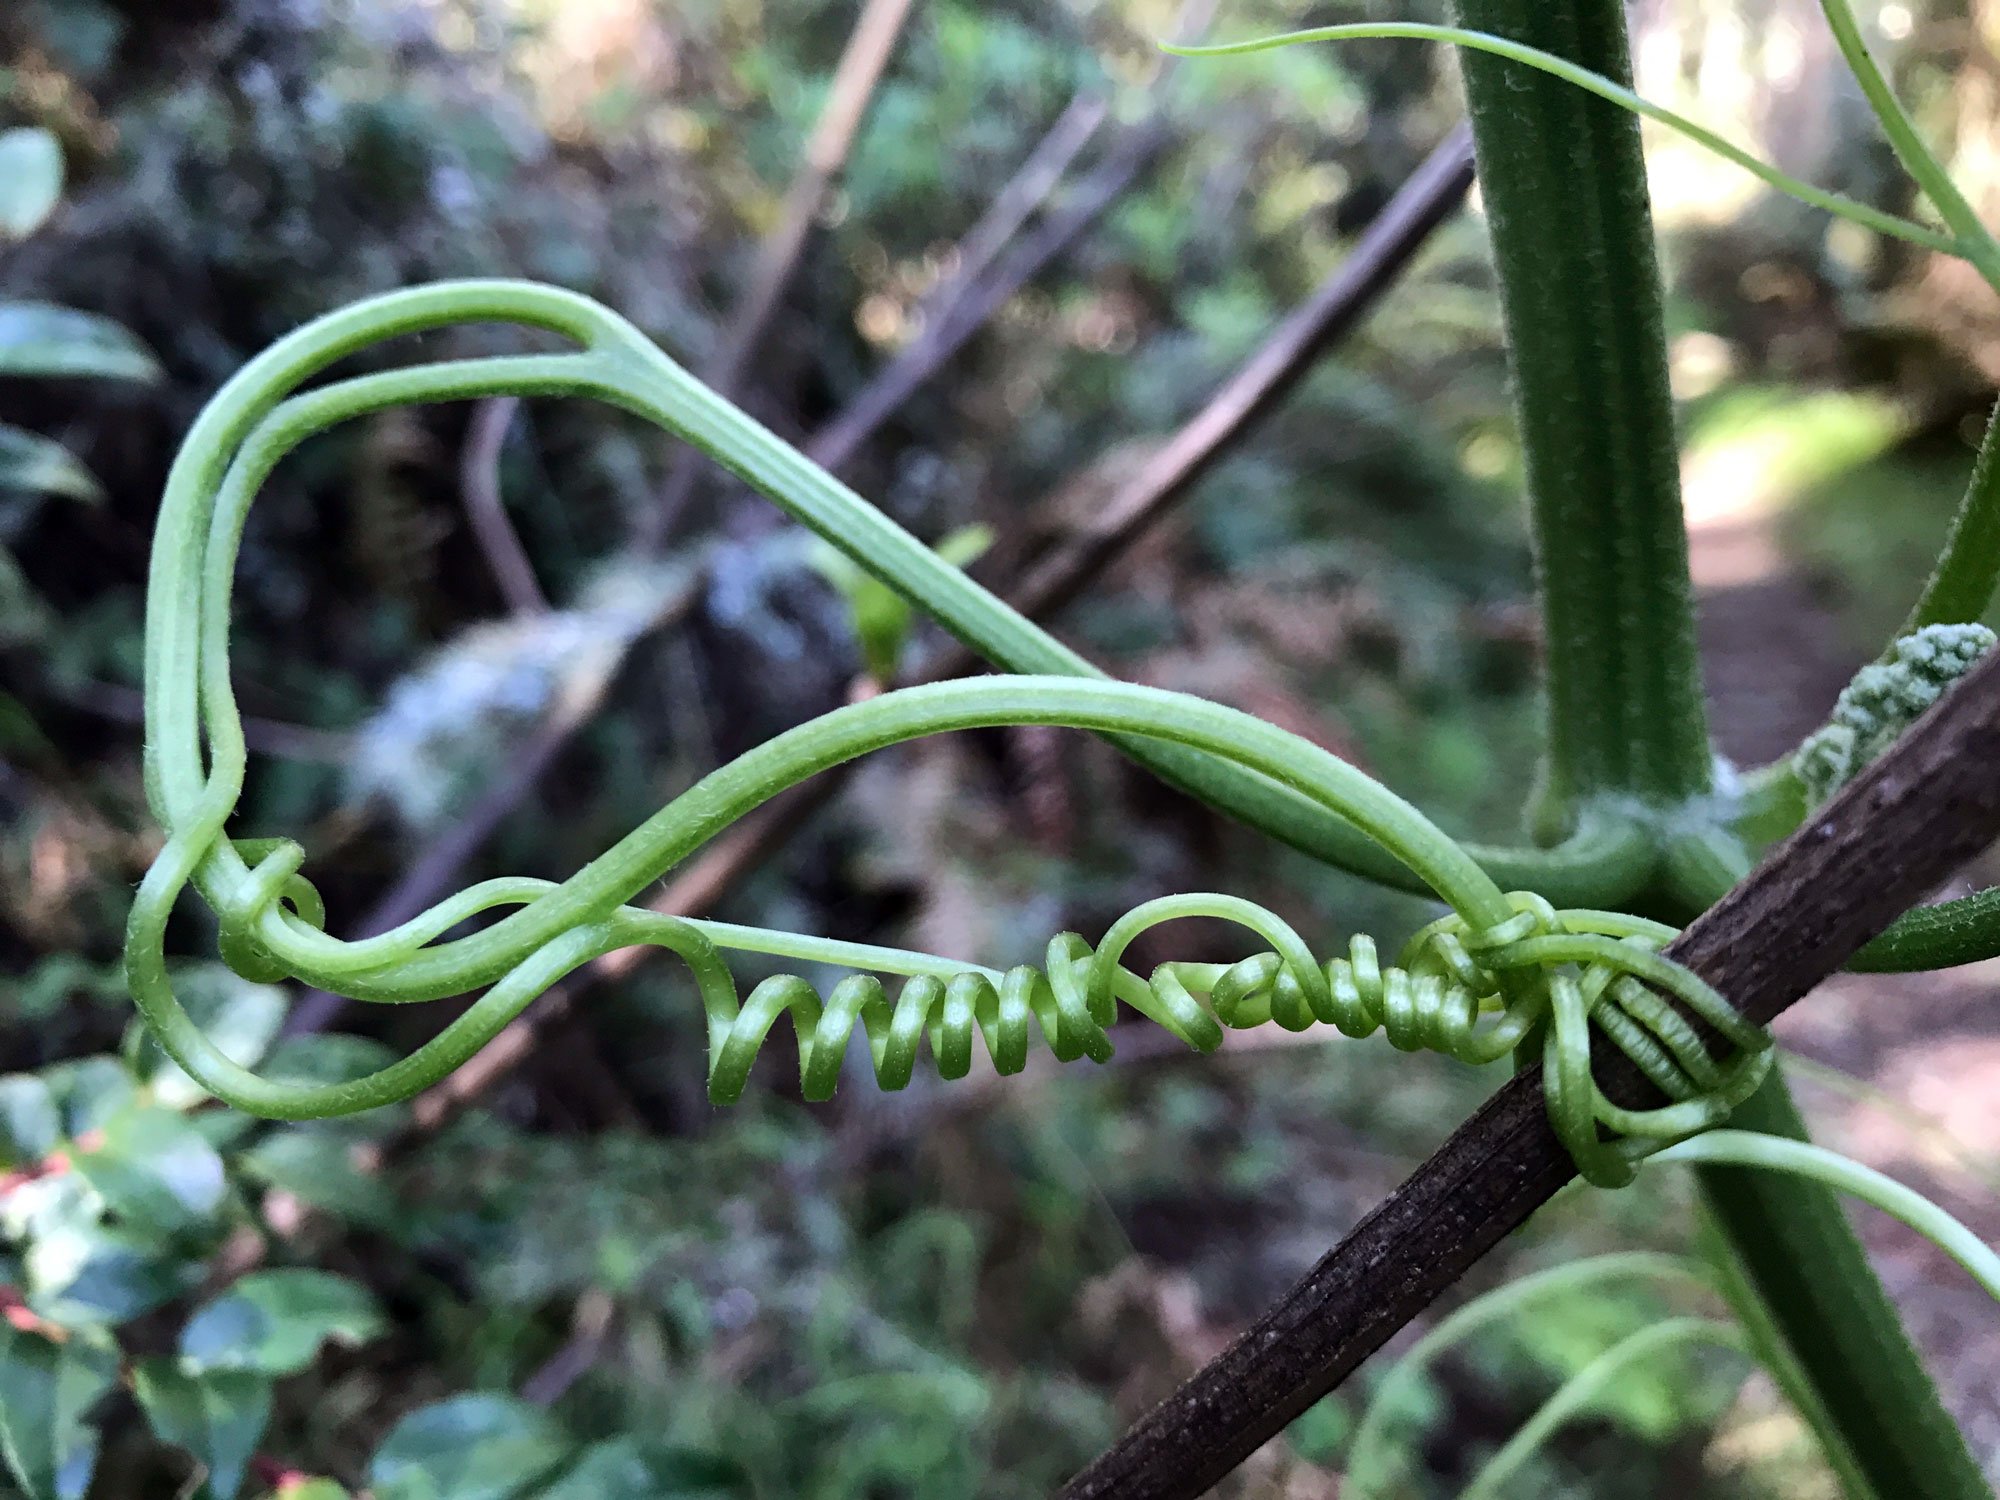 Alamea: California Manroot vines (Marah fabacea)